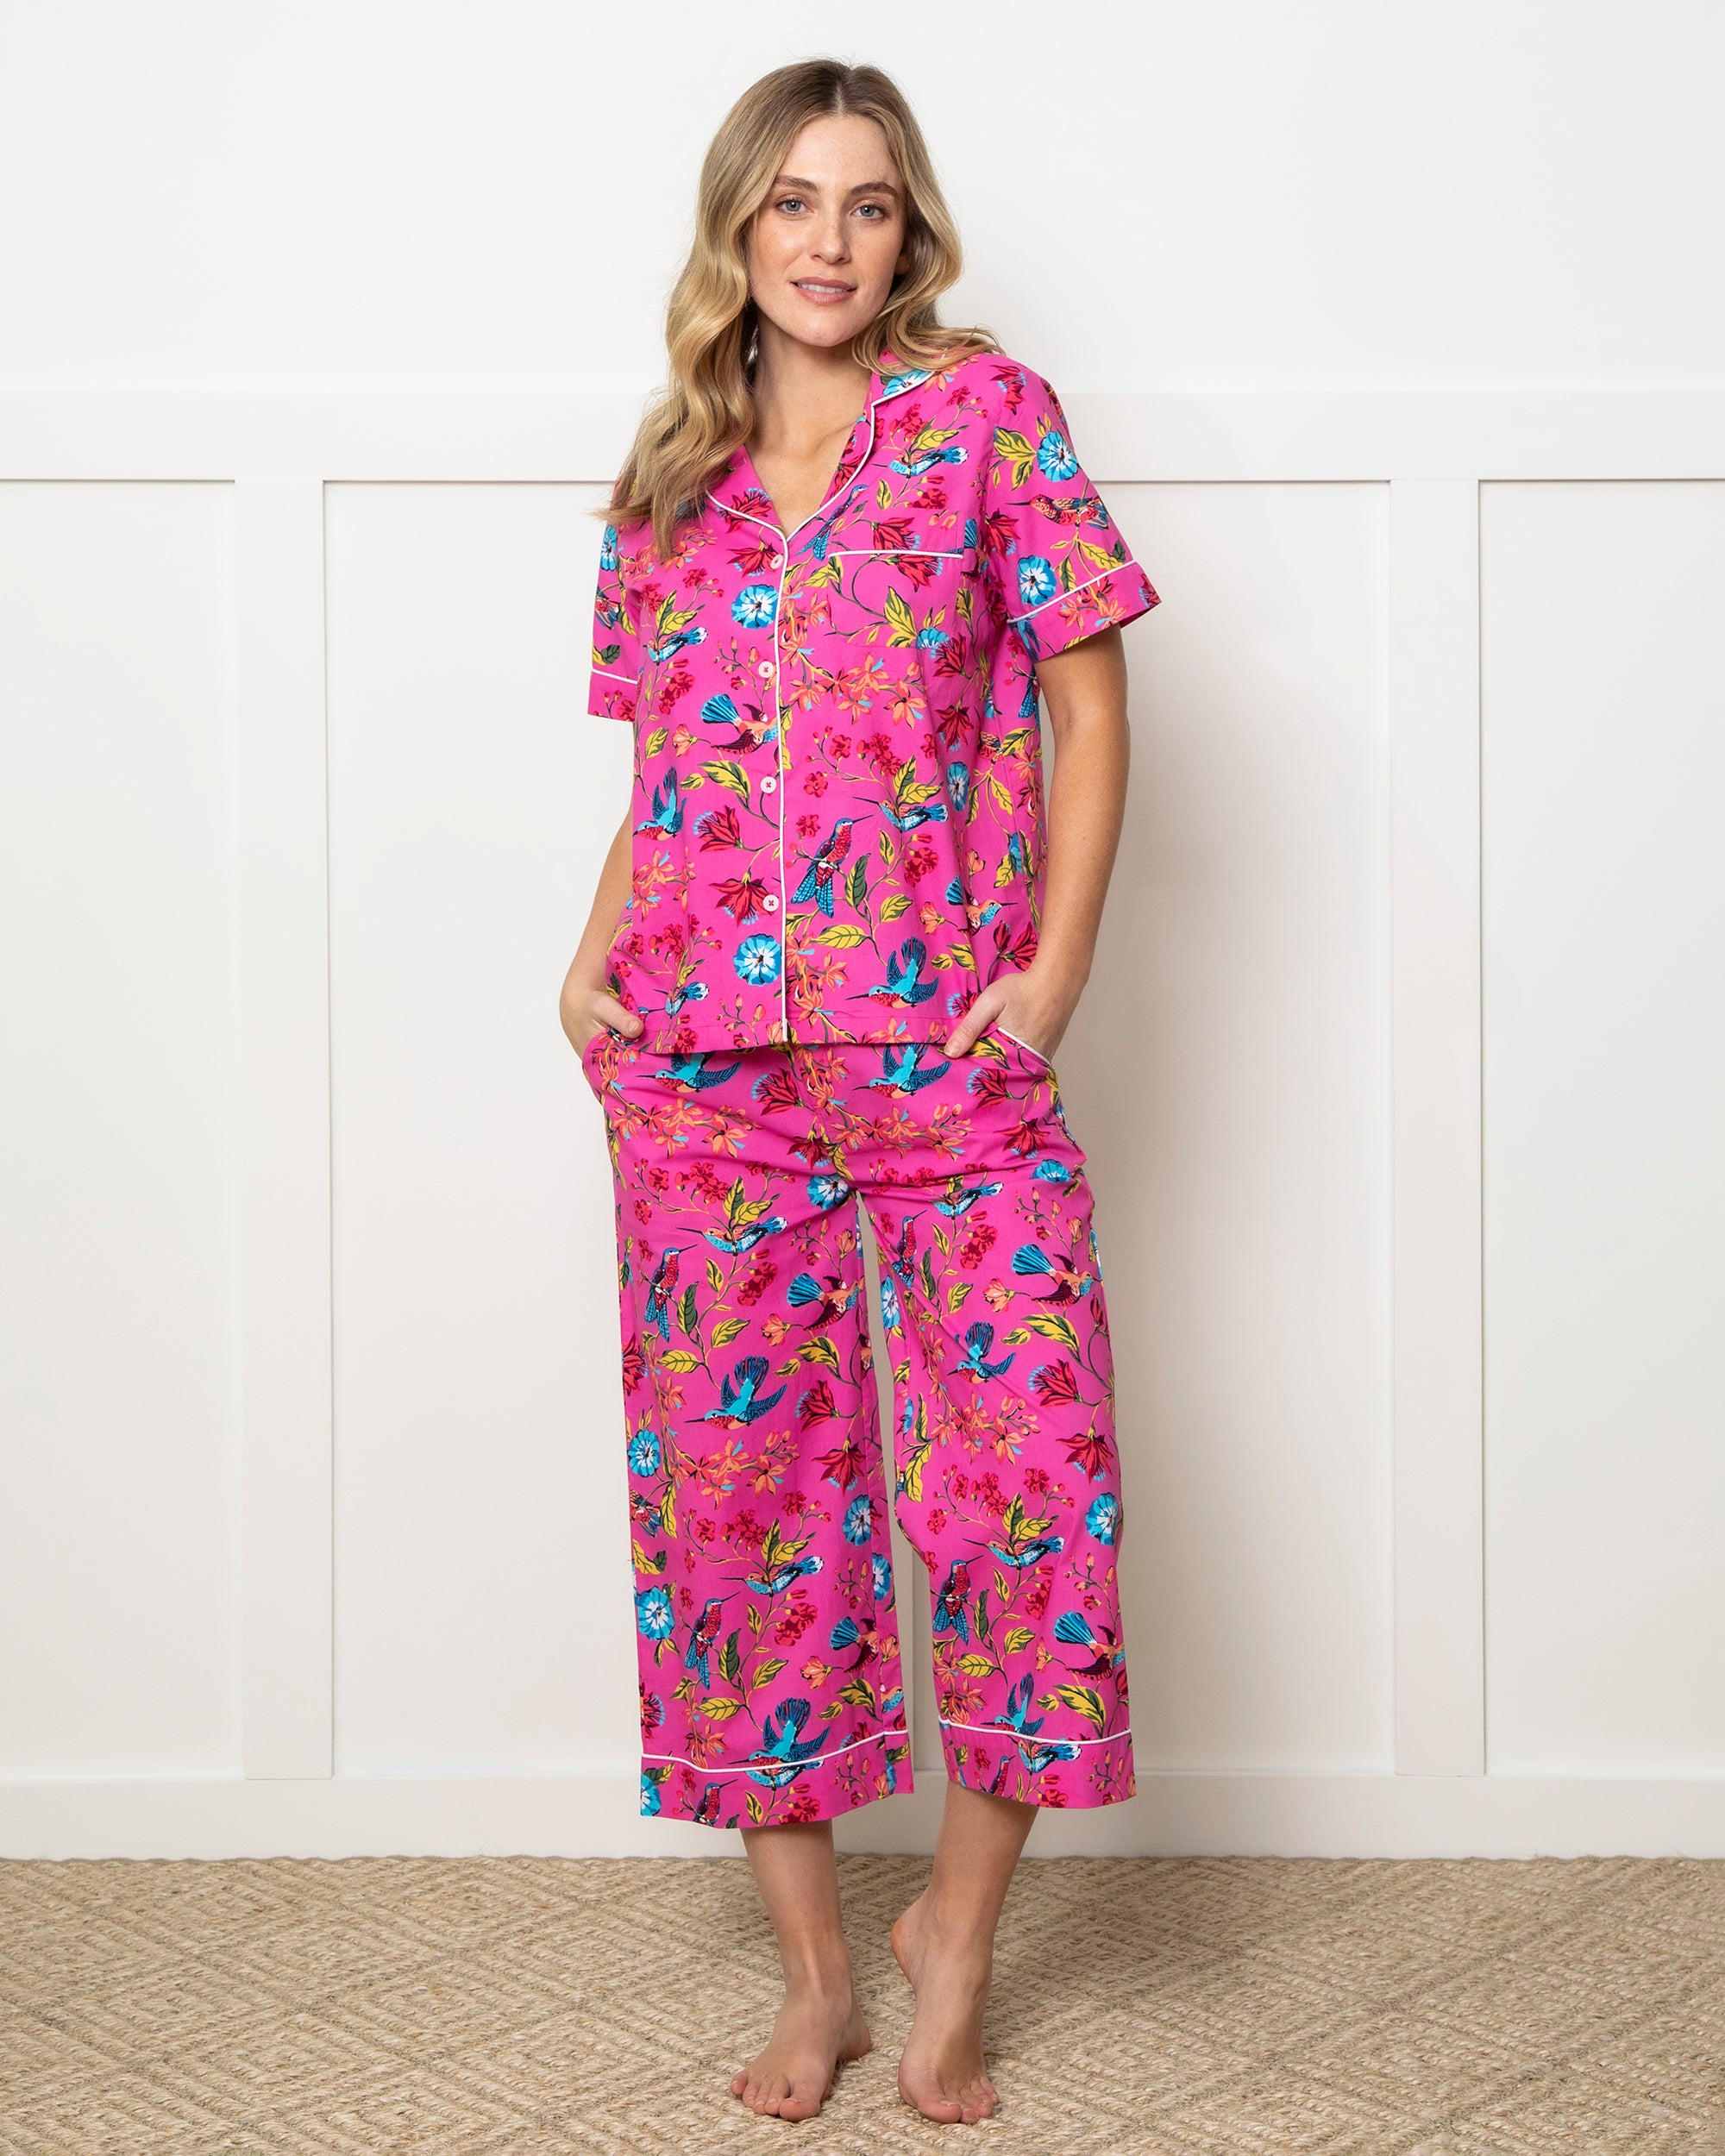 ENJOYNIGHT Women's Sleepwear Tops with Capri Pants India | Ubuy